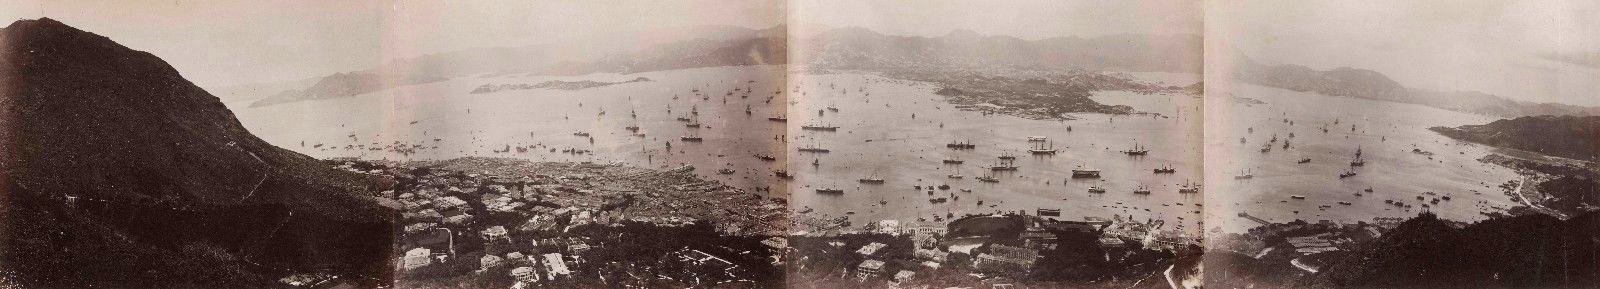 Lai Afong, Hong Kong panorama view, c1880 photo